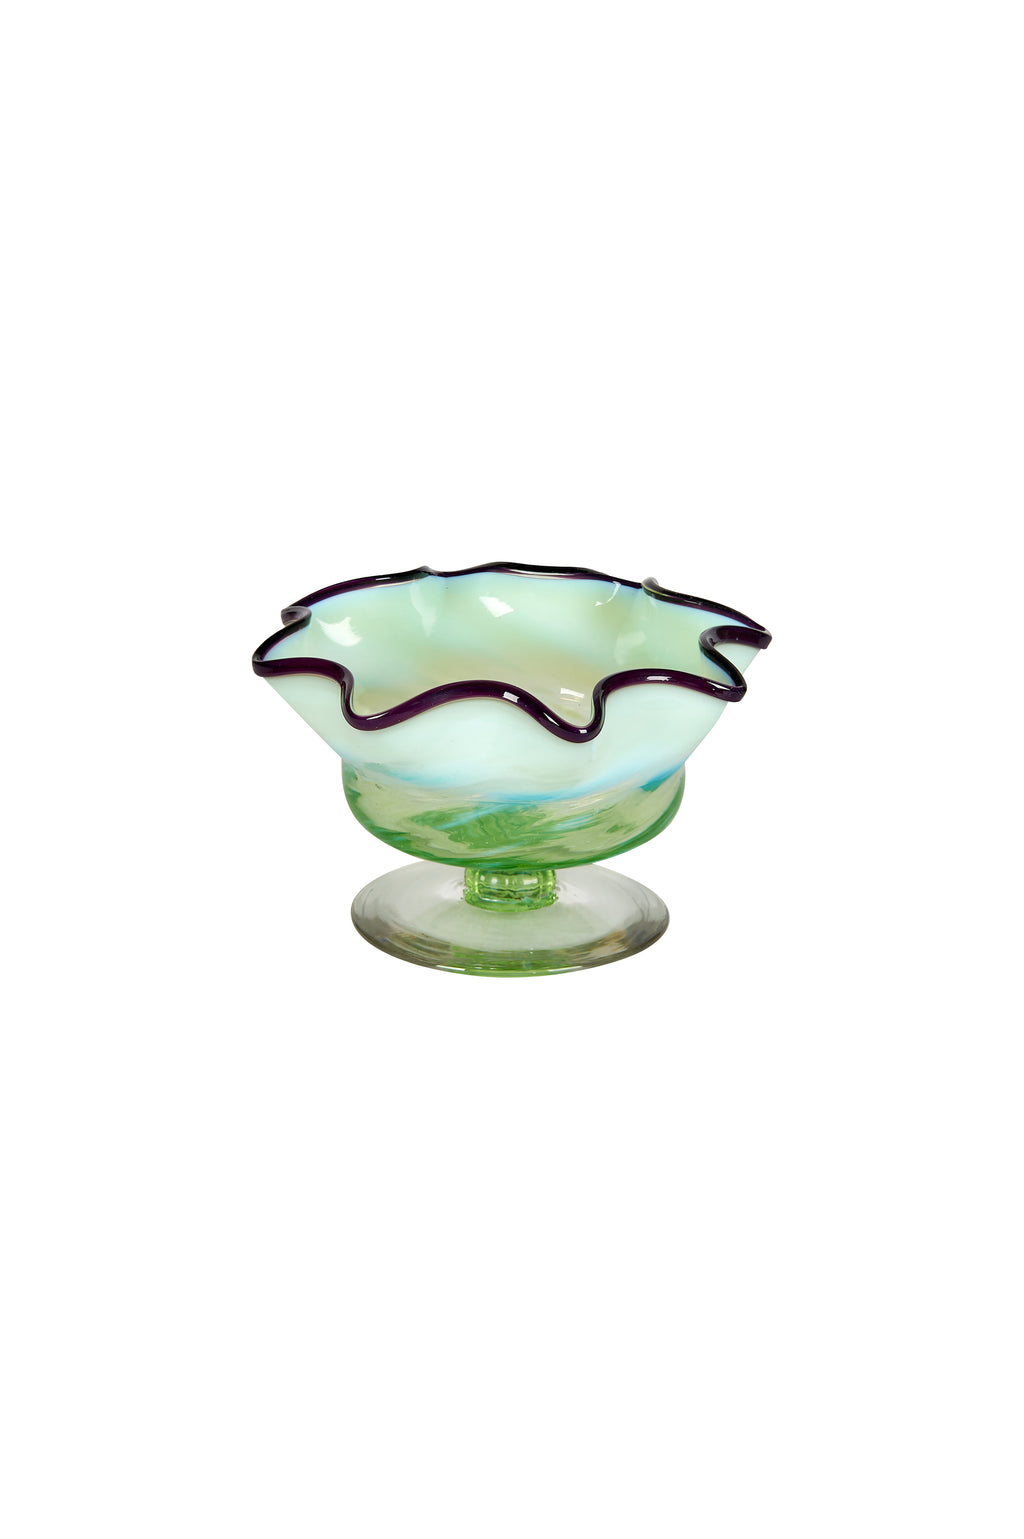 Antique Victorian Opalescent / Vaseline Green Glass Bowl